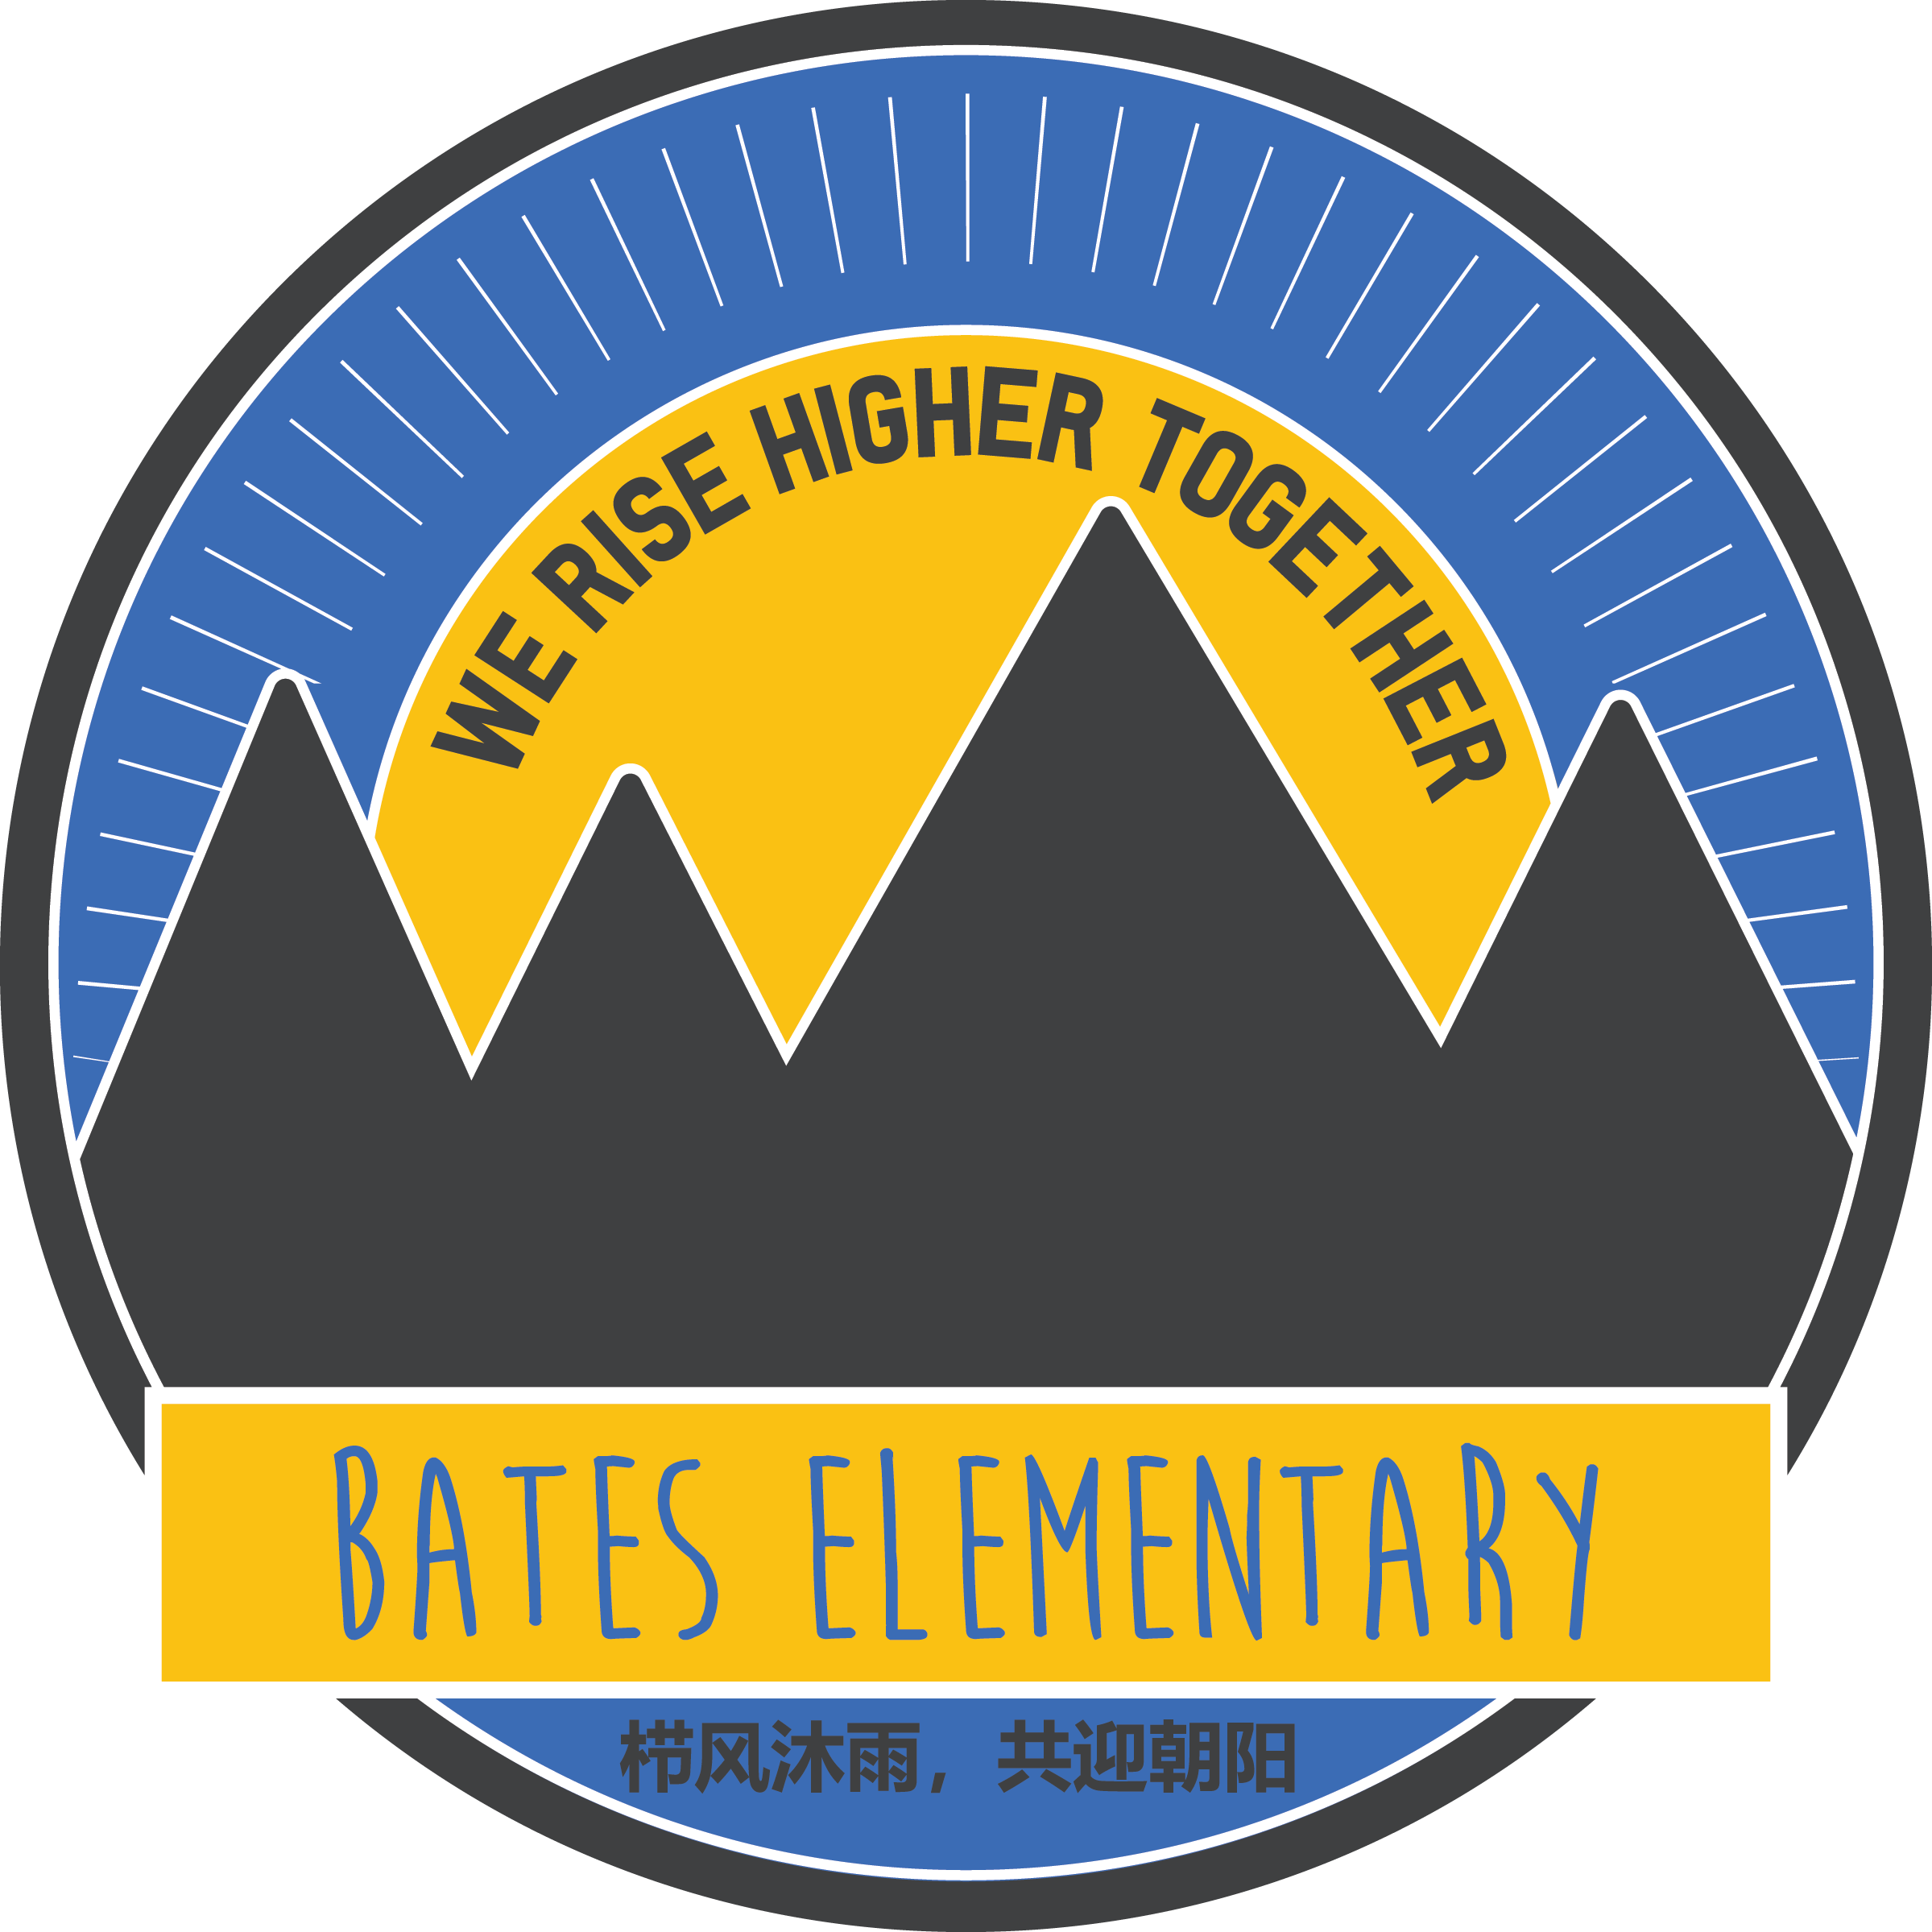 Bates Elementary